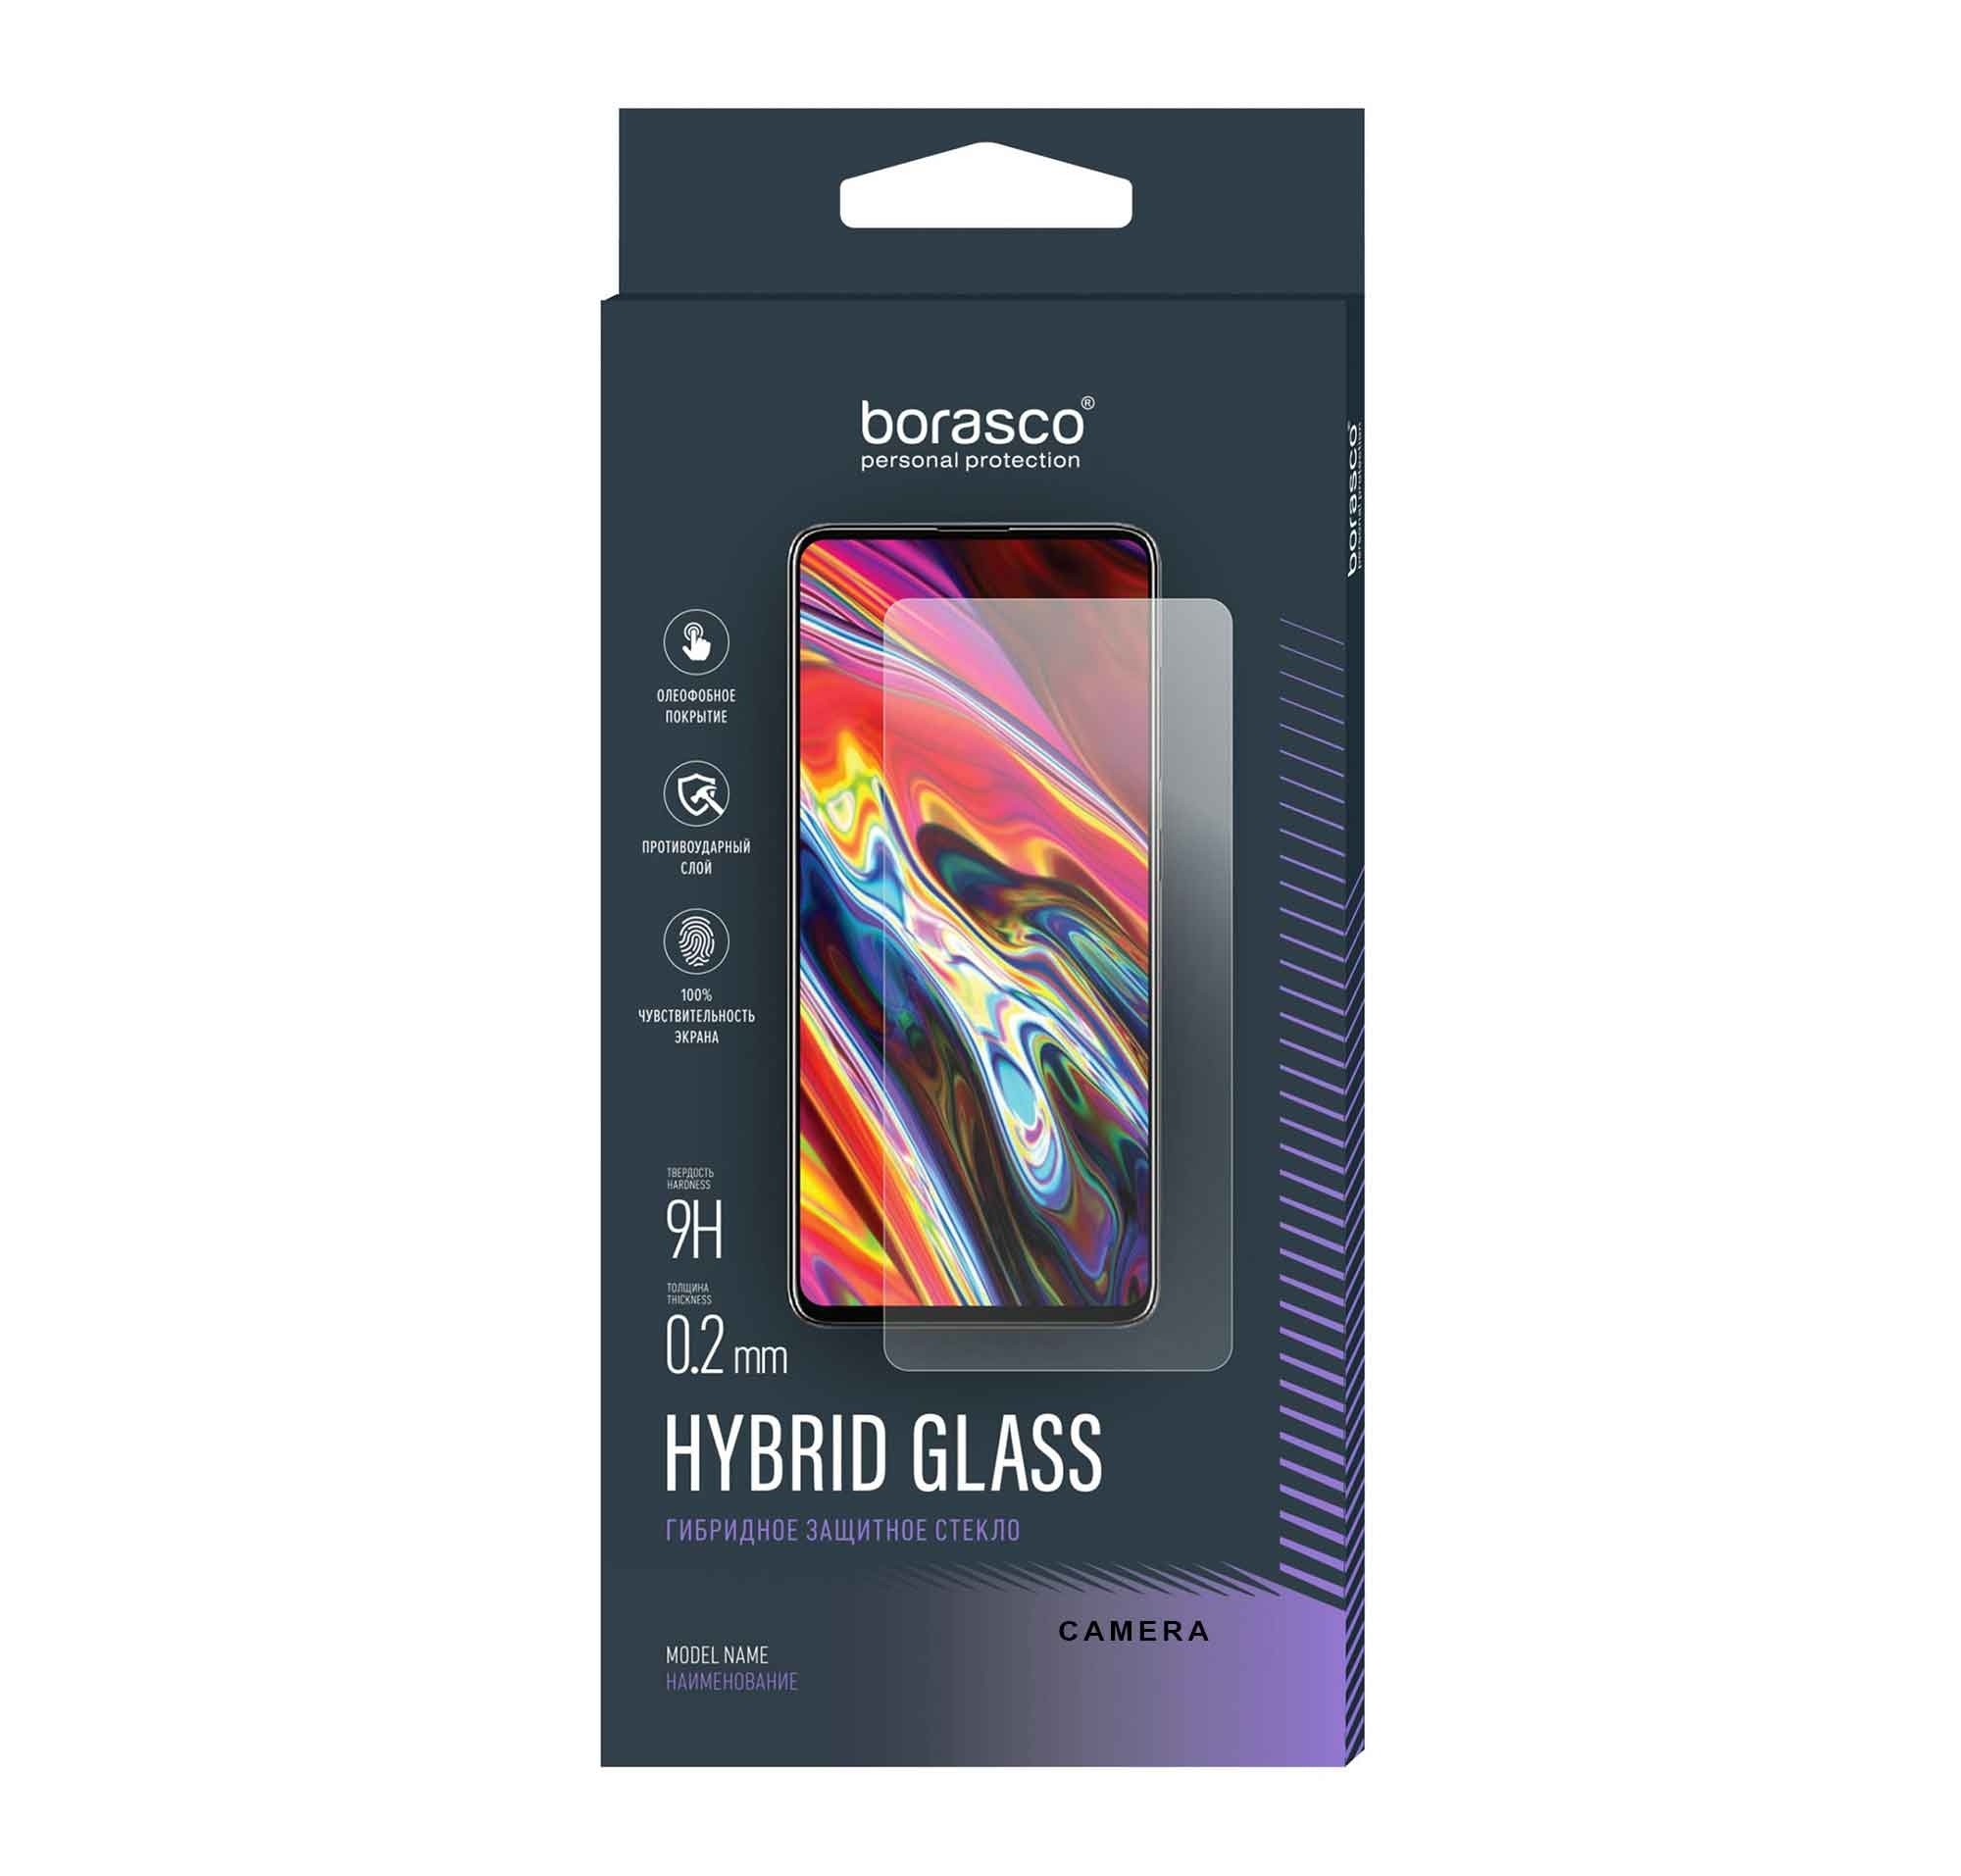 Защитное стекло (Экран+Камера) BoraSCO Hybrid Glass для ITEL Vision 3 Plus чехол mypads дерево с золотыми трещинами для itel vision 3 plus itel p38 pro задняя панель накладка бампер